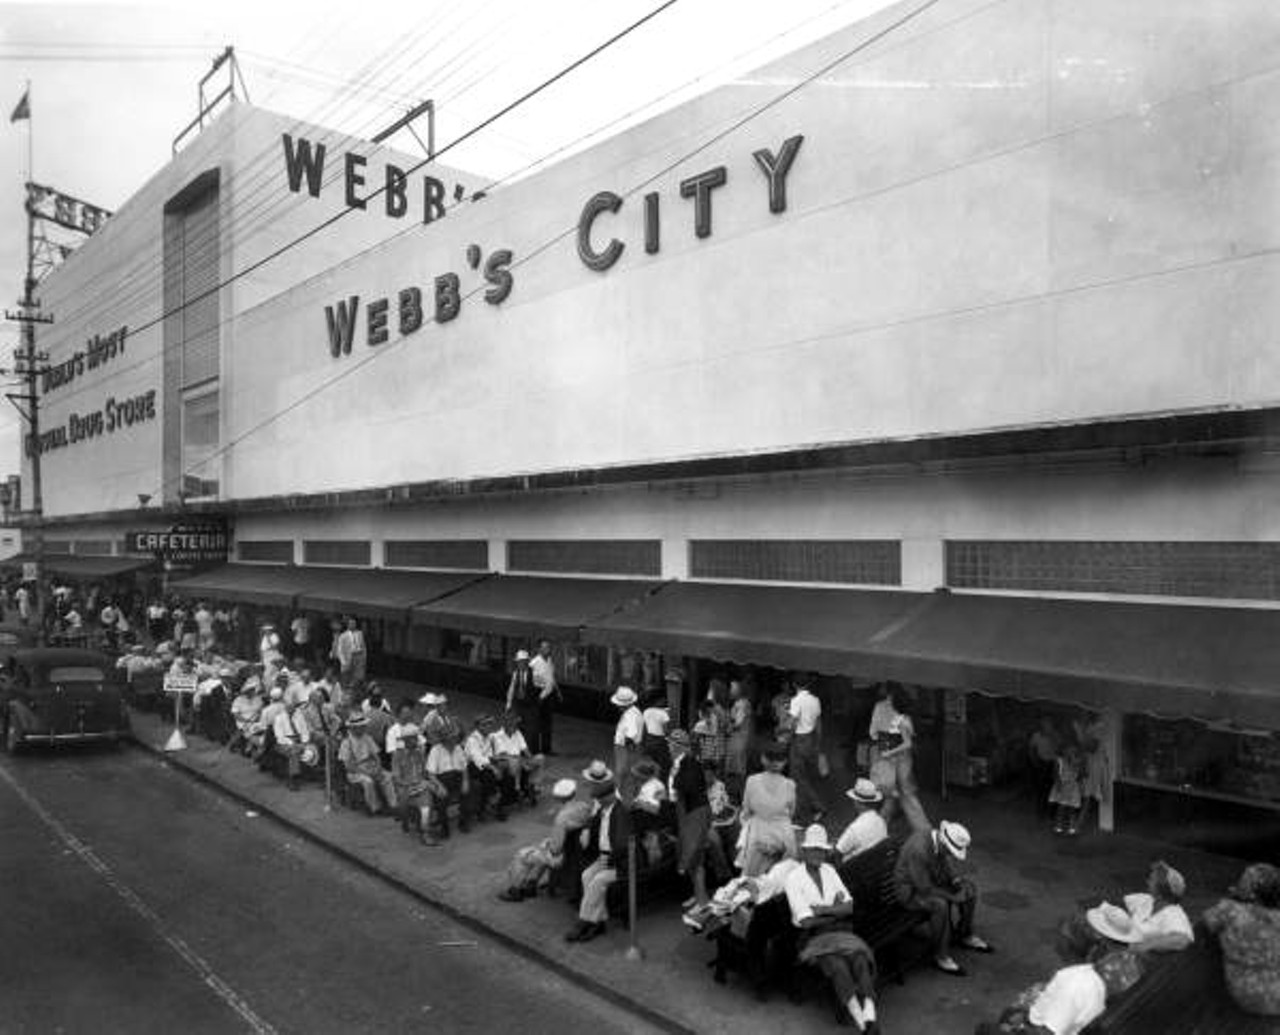 Webb's City drugstore - Saint Petersburg, Florida. 1948.